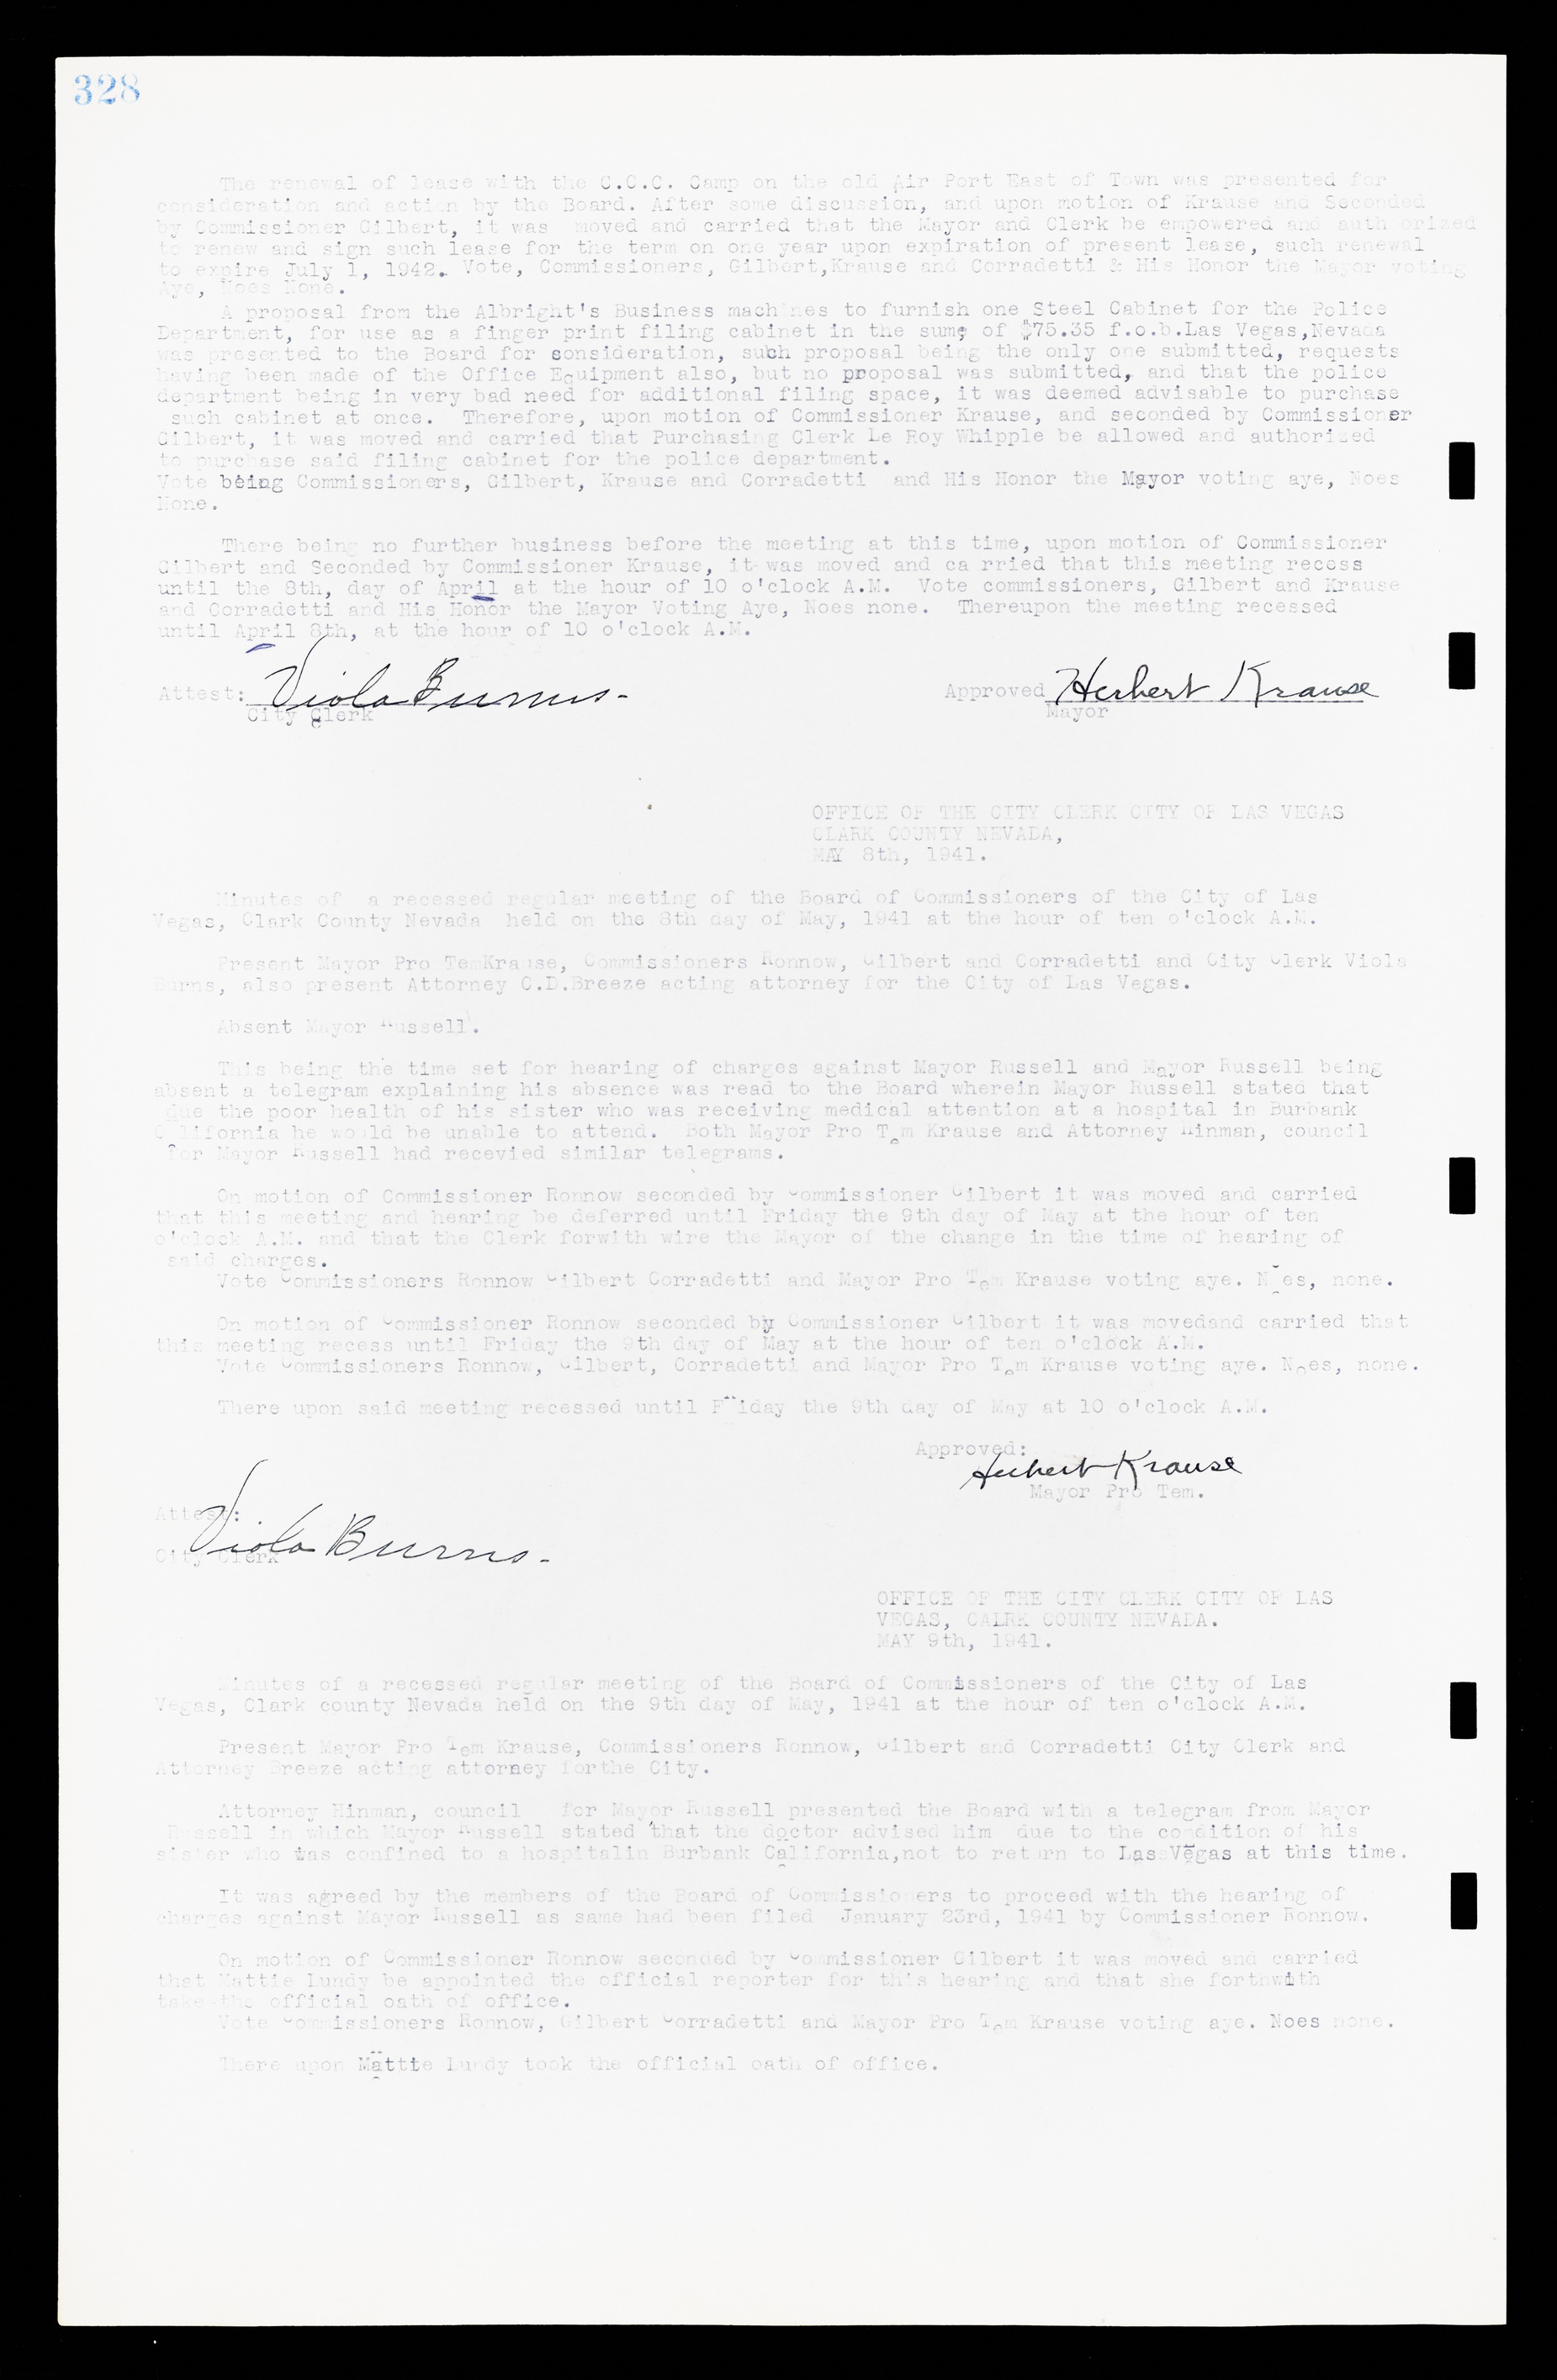 Las Vegas City Commission Minutes, February 17, 1937 to August 4, 1942, lvc000004-352